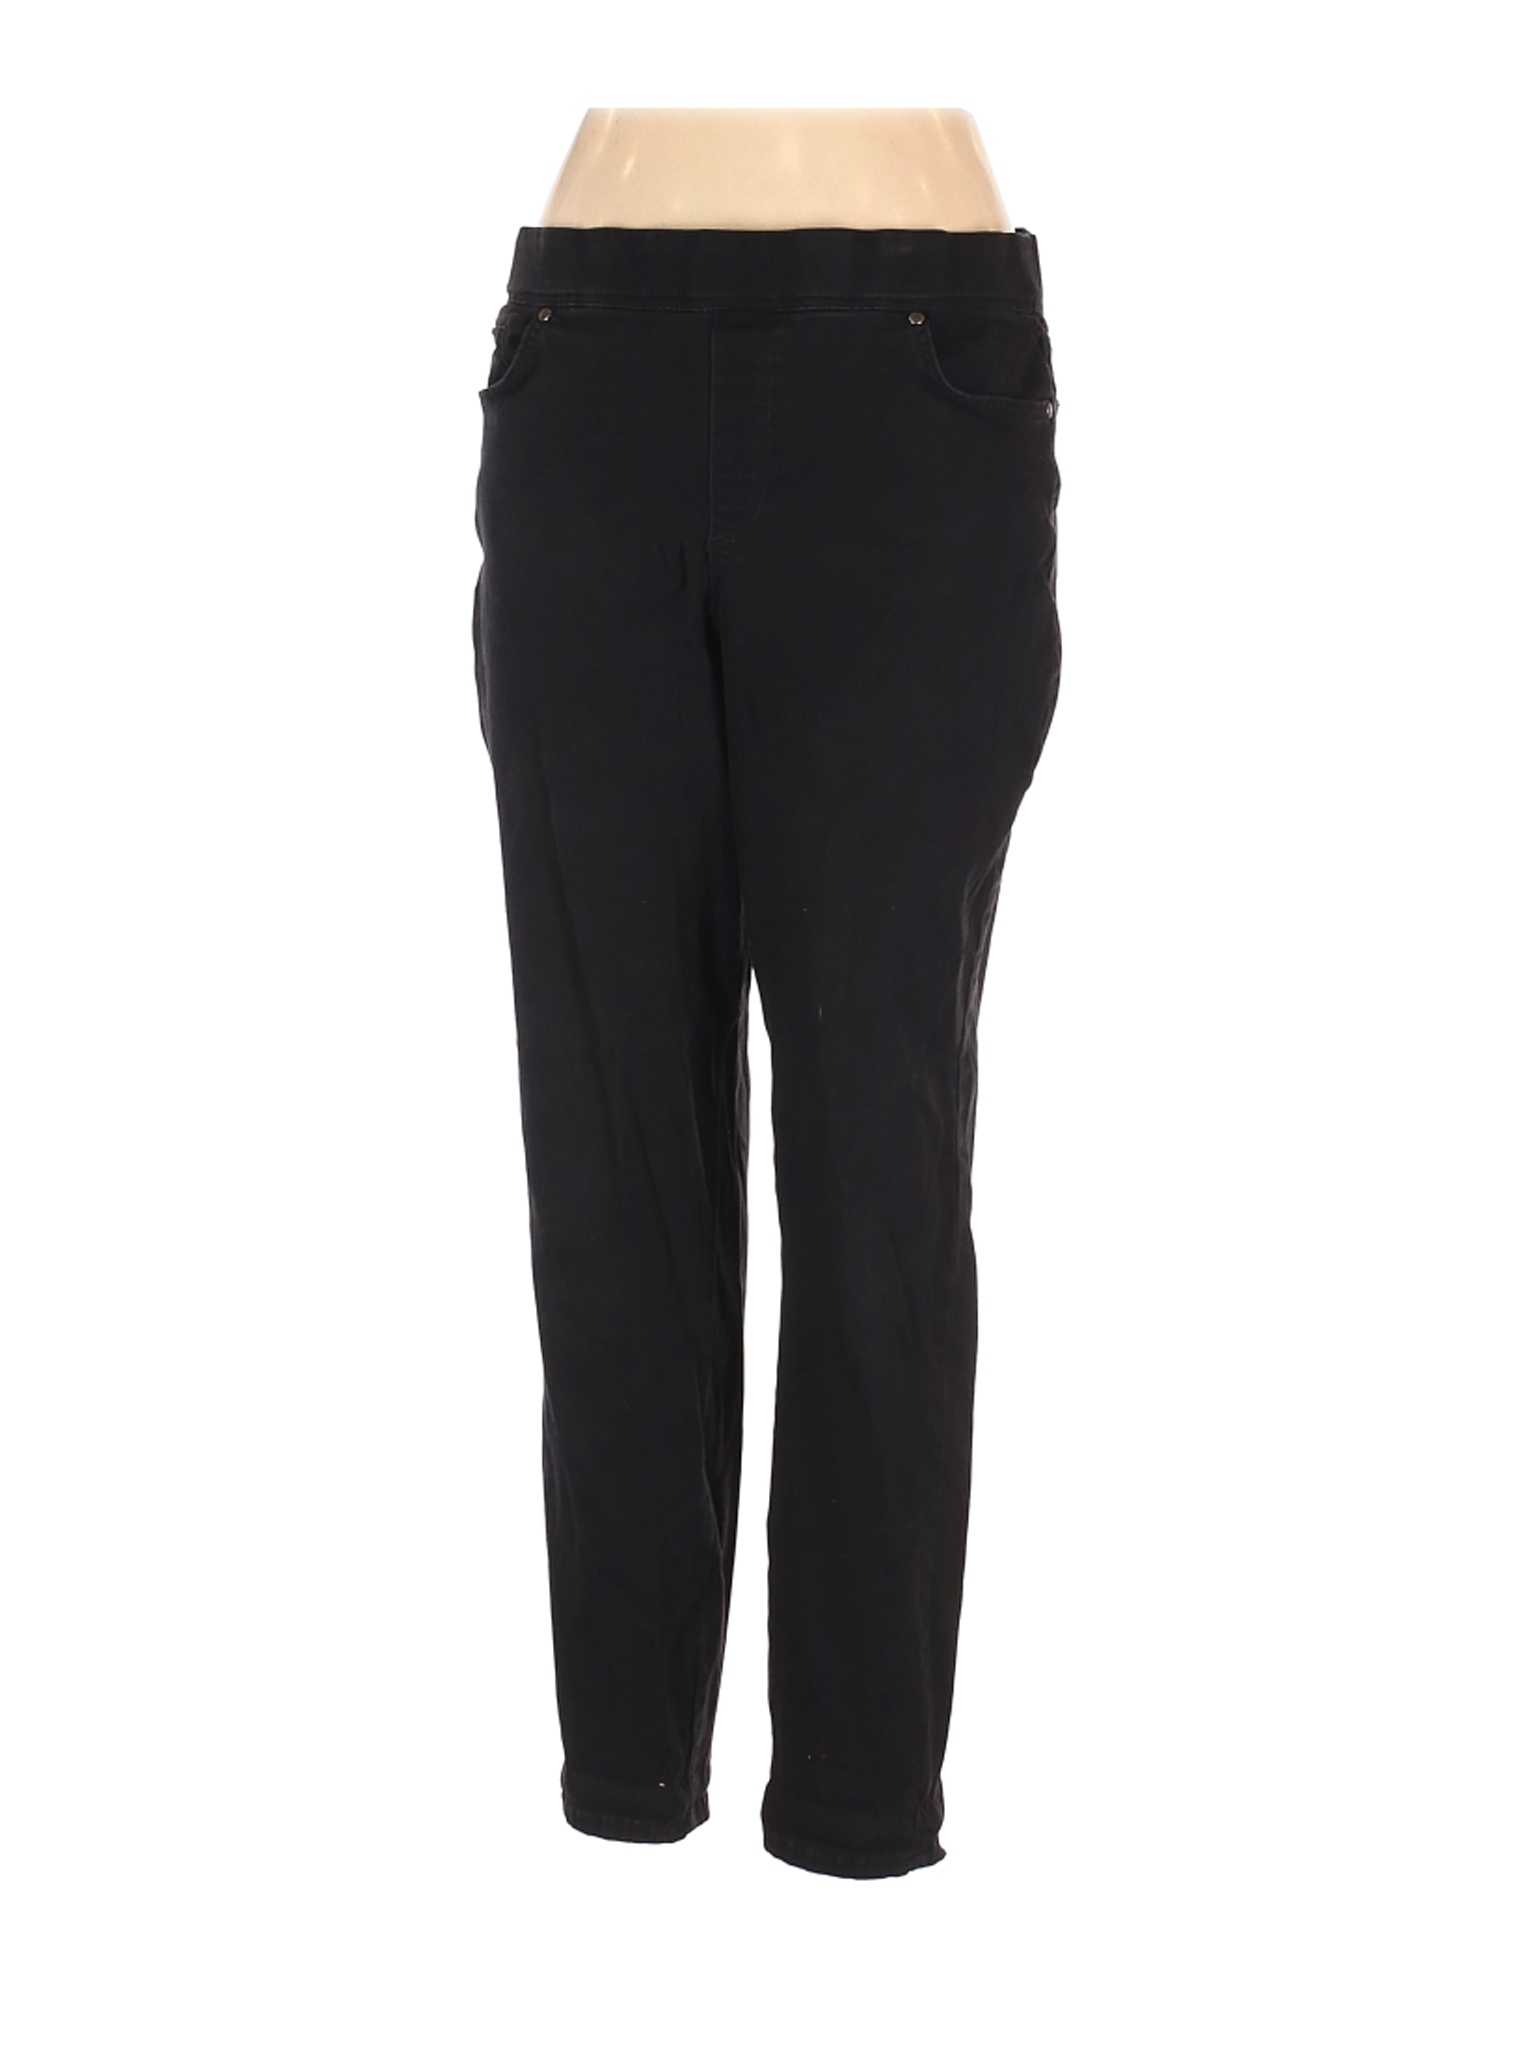 Gloria Vanderbilt Women Black Casual Pants 14 | eBay